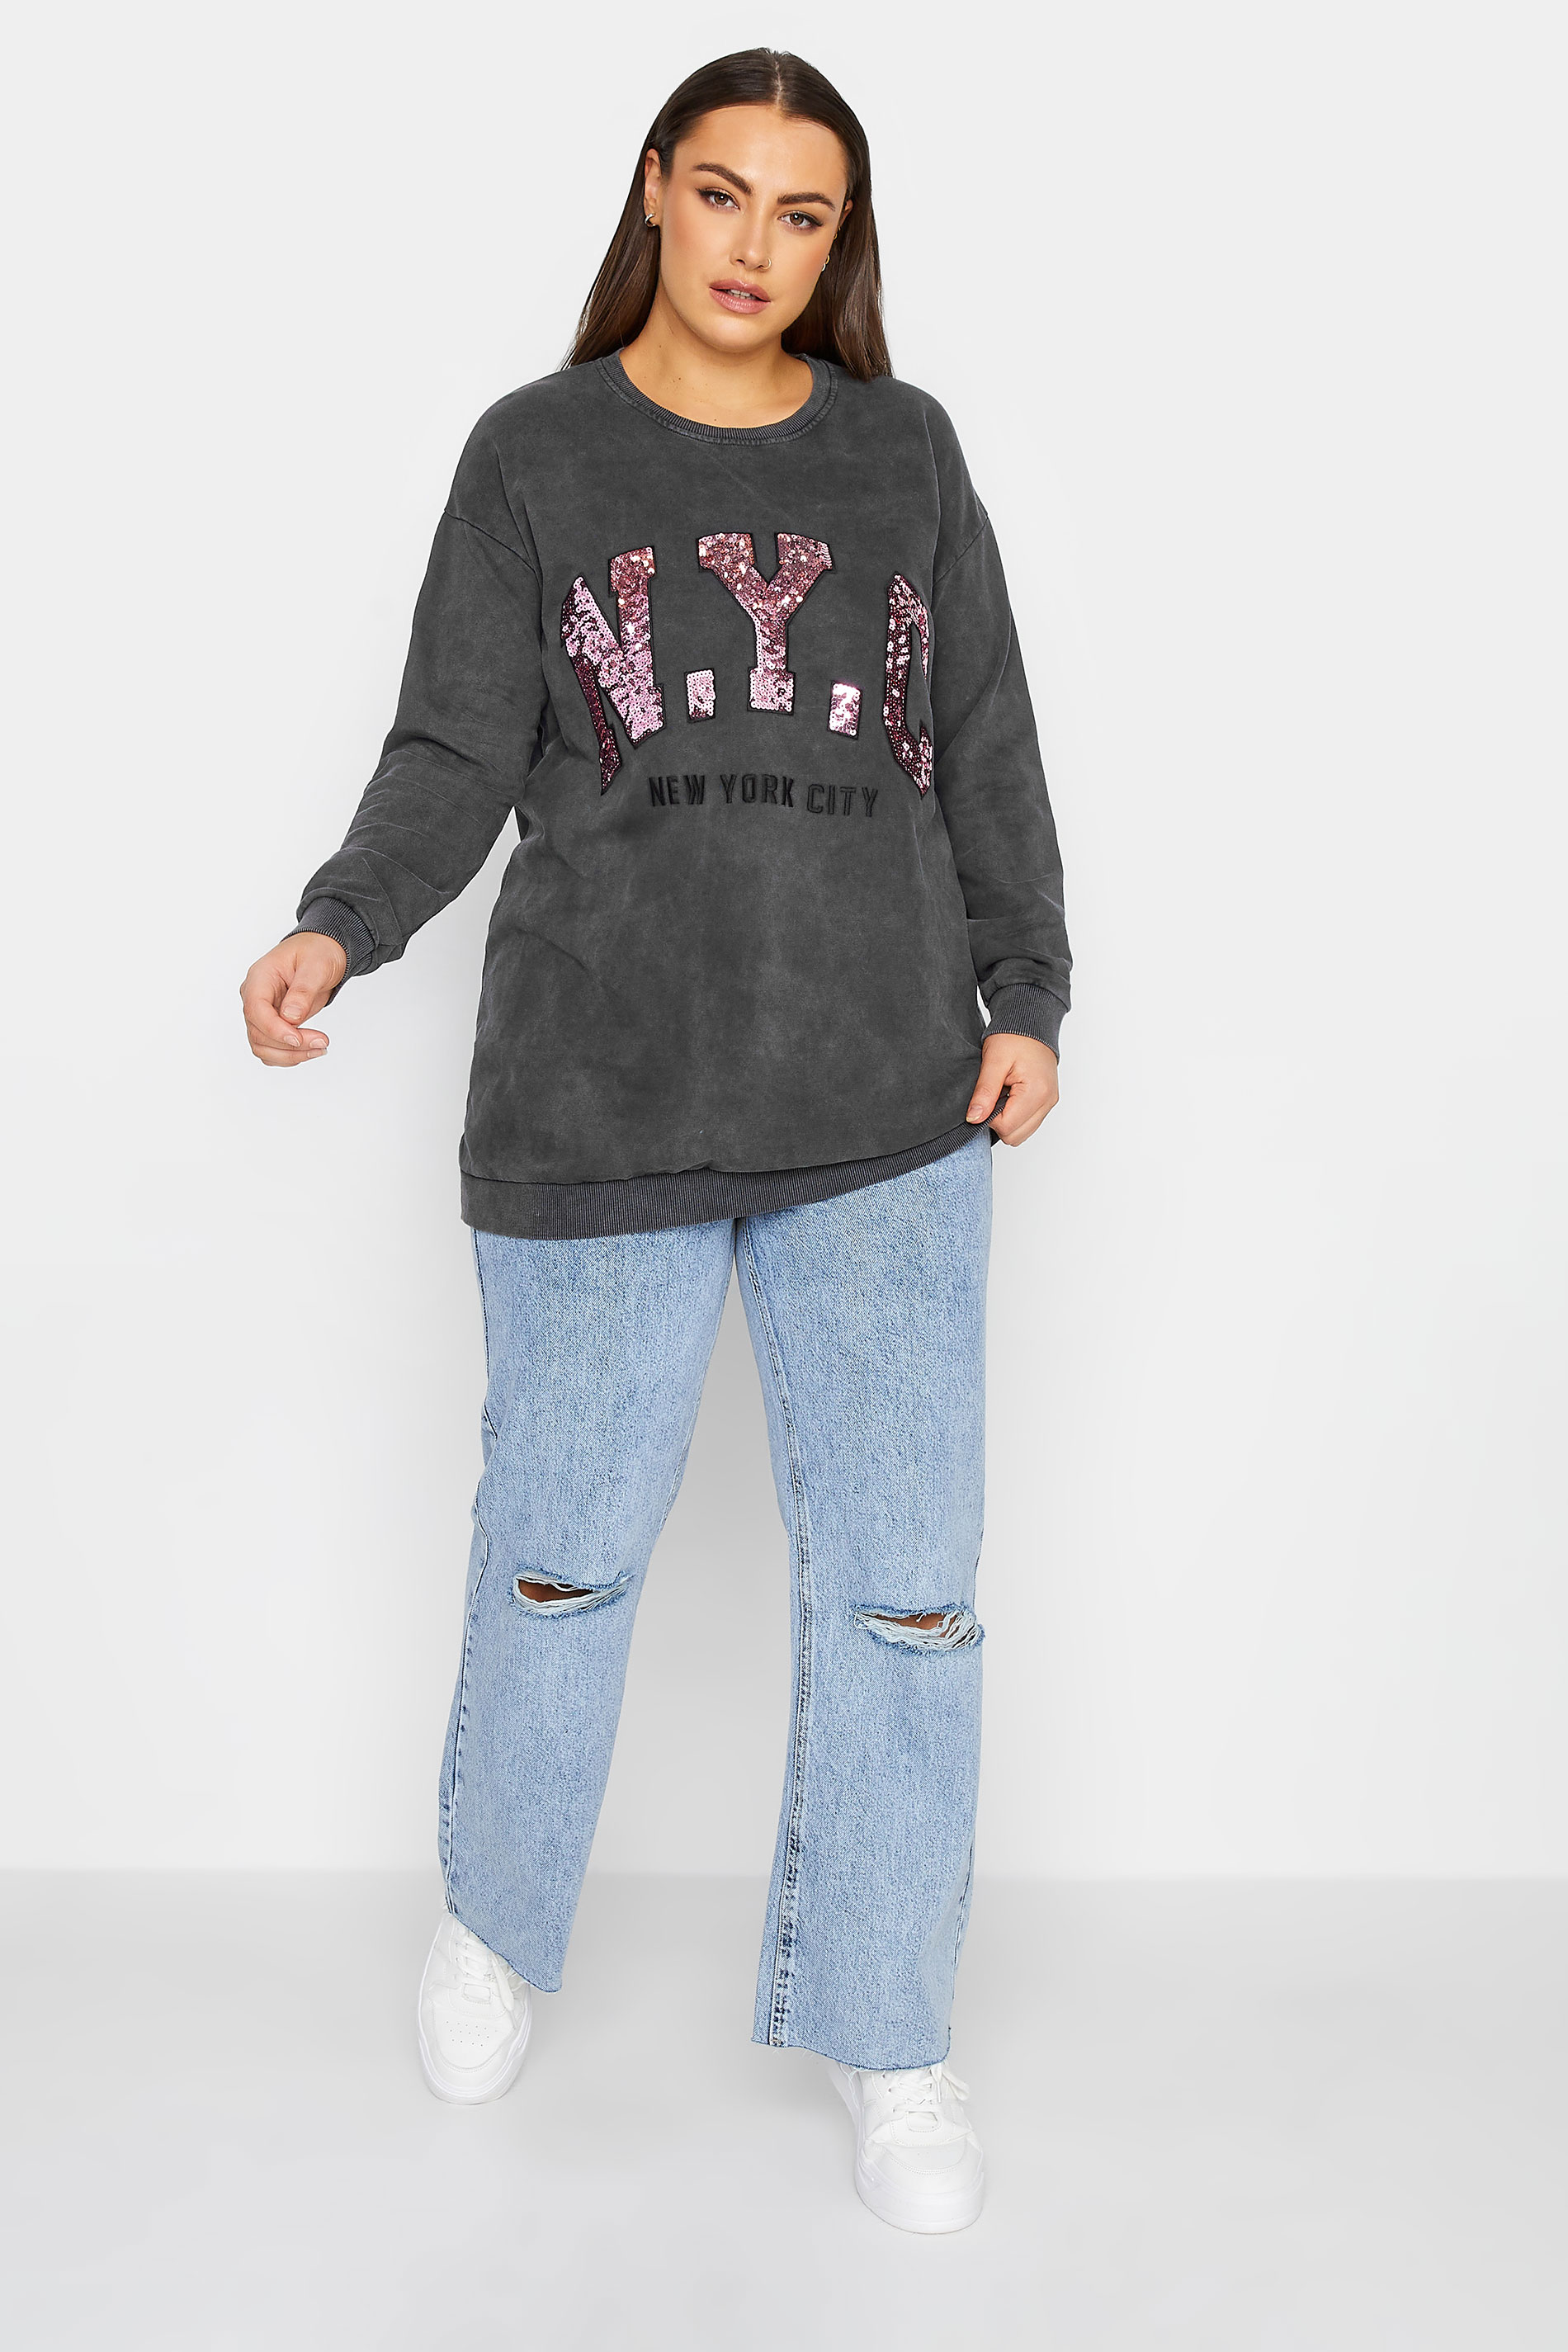 YOURS LUXURY Plus Size Grey Acid Wash Embellished 'NYC' Sweatshirt | Yours Clothing 3